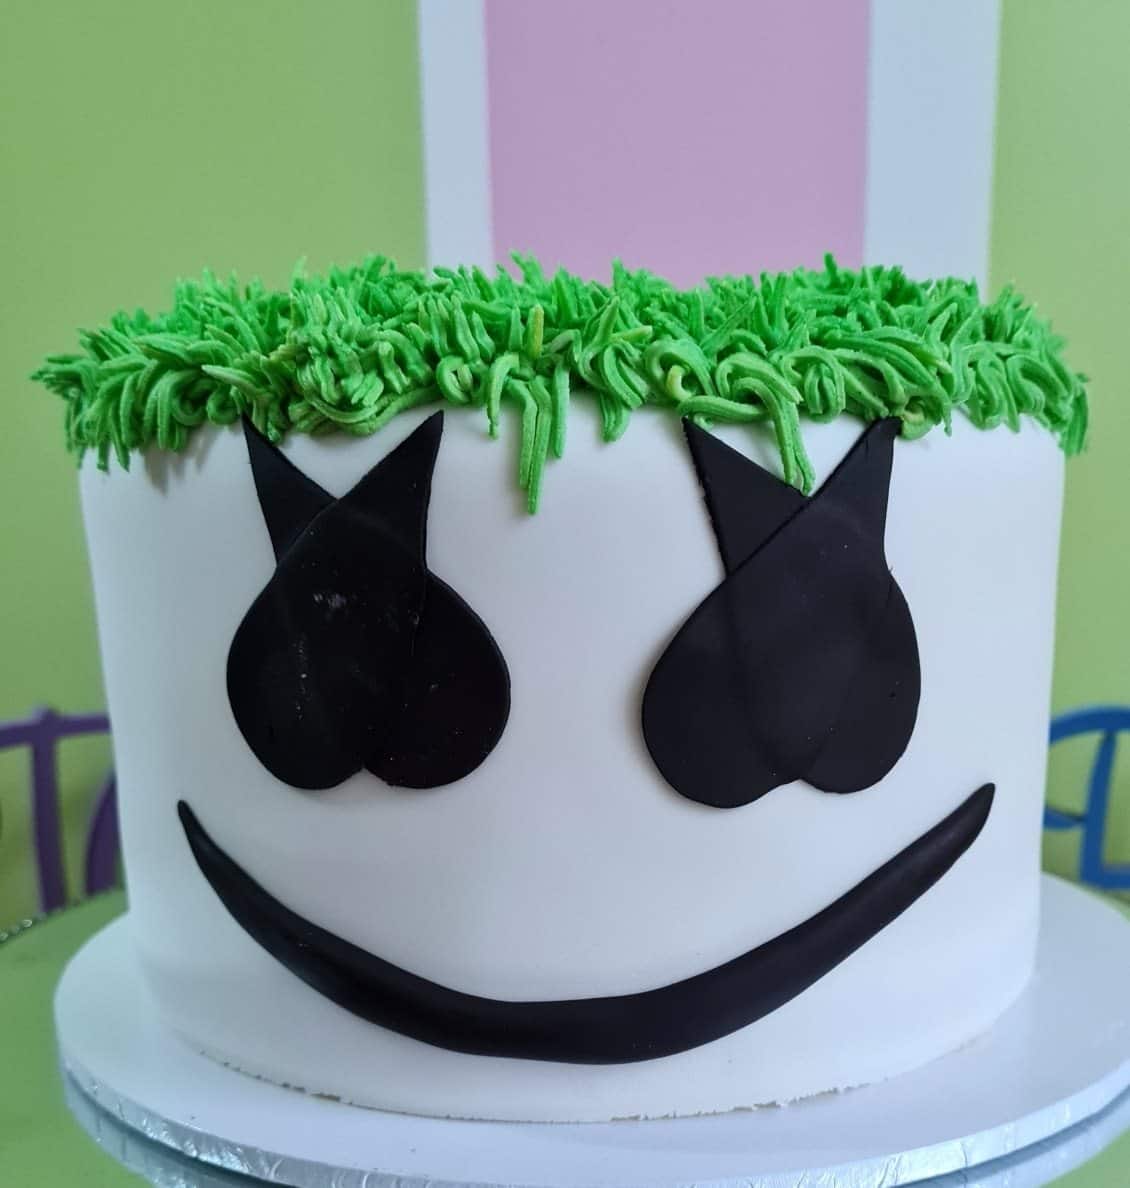 15 simple Fortnite cakes: Best ideas for birthdays and parties - Tuko.co.ke